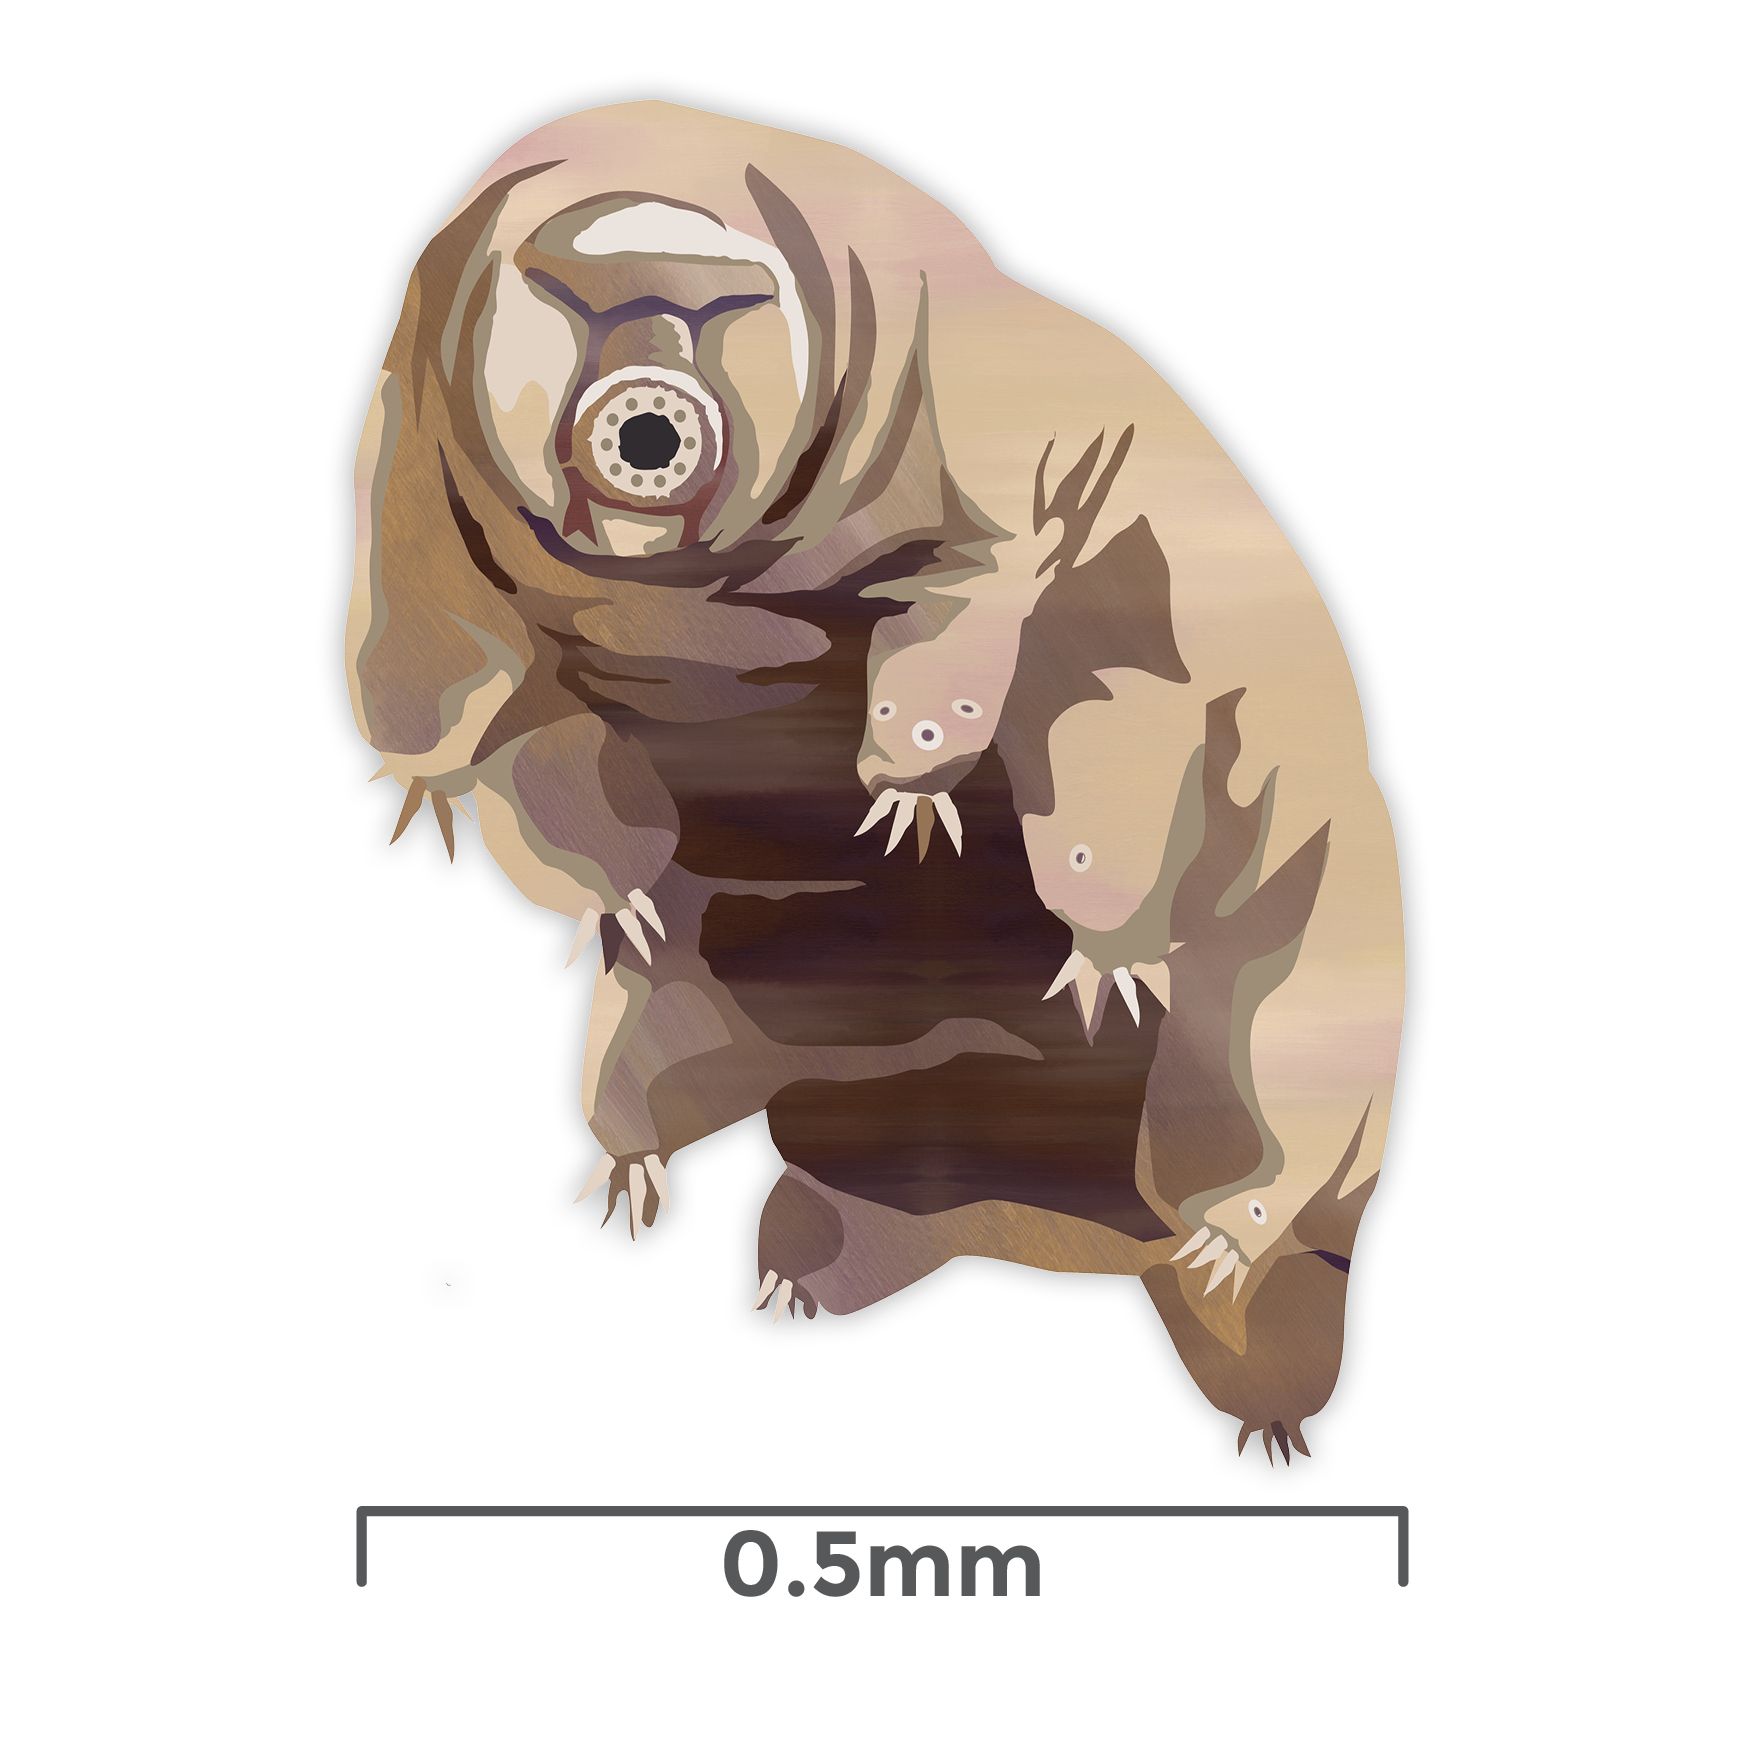 Drawing of a tardigrade